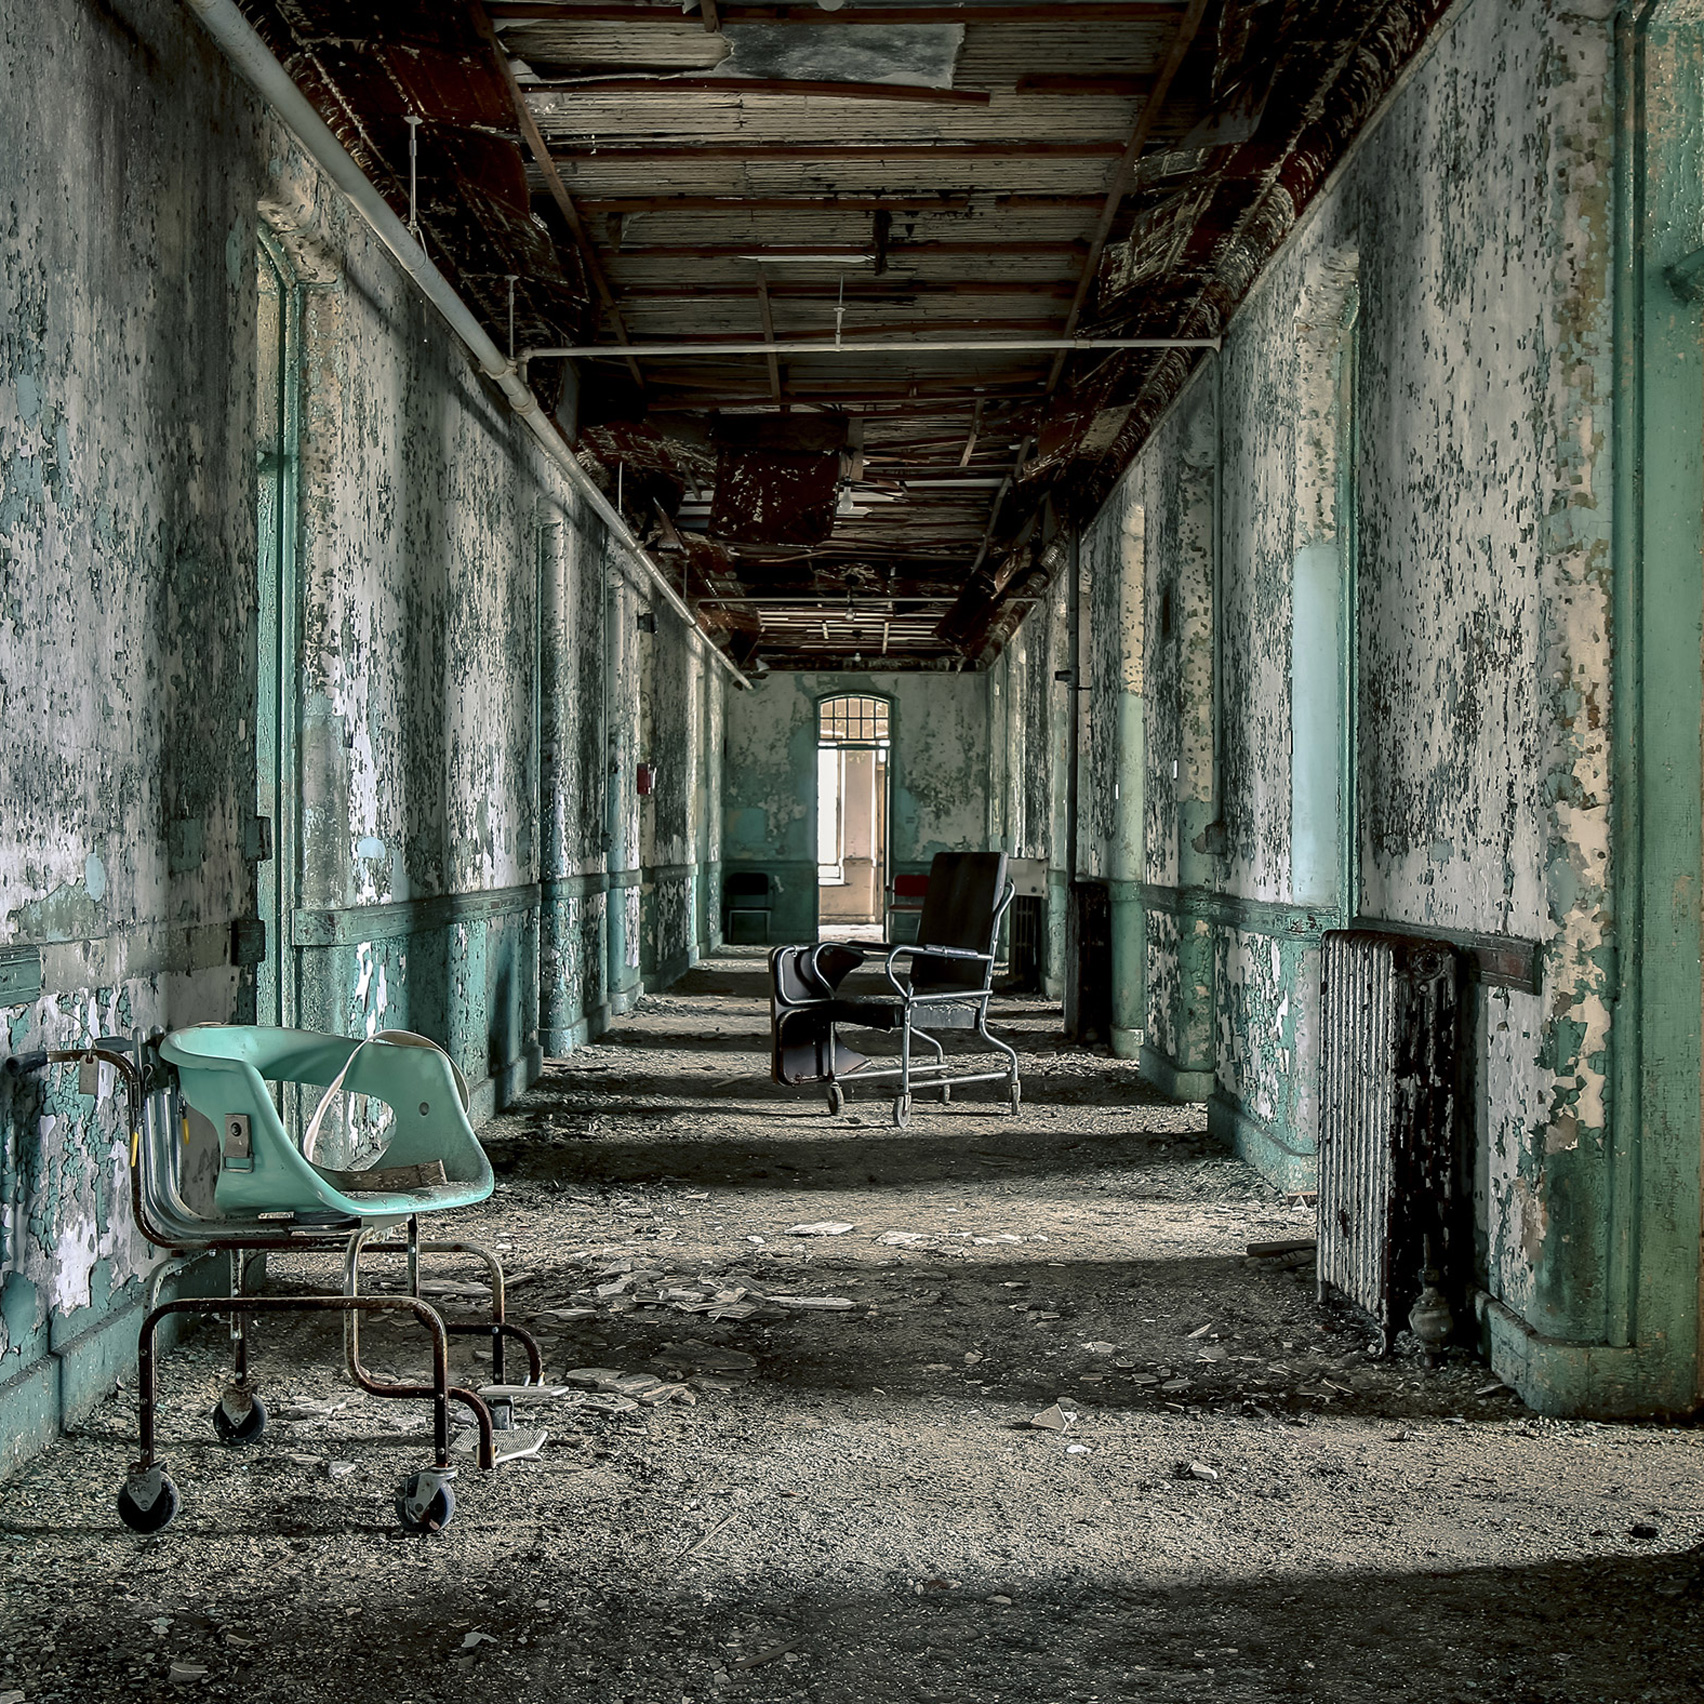 Abandoned Asylums by Matt van der Velde